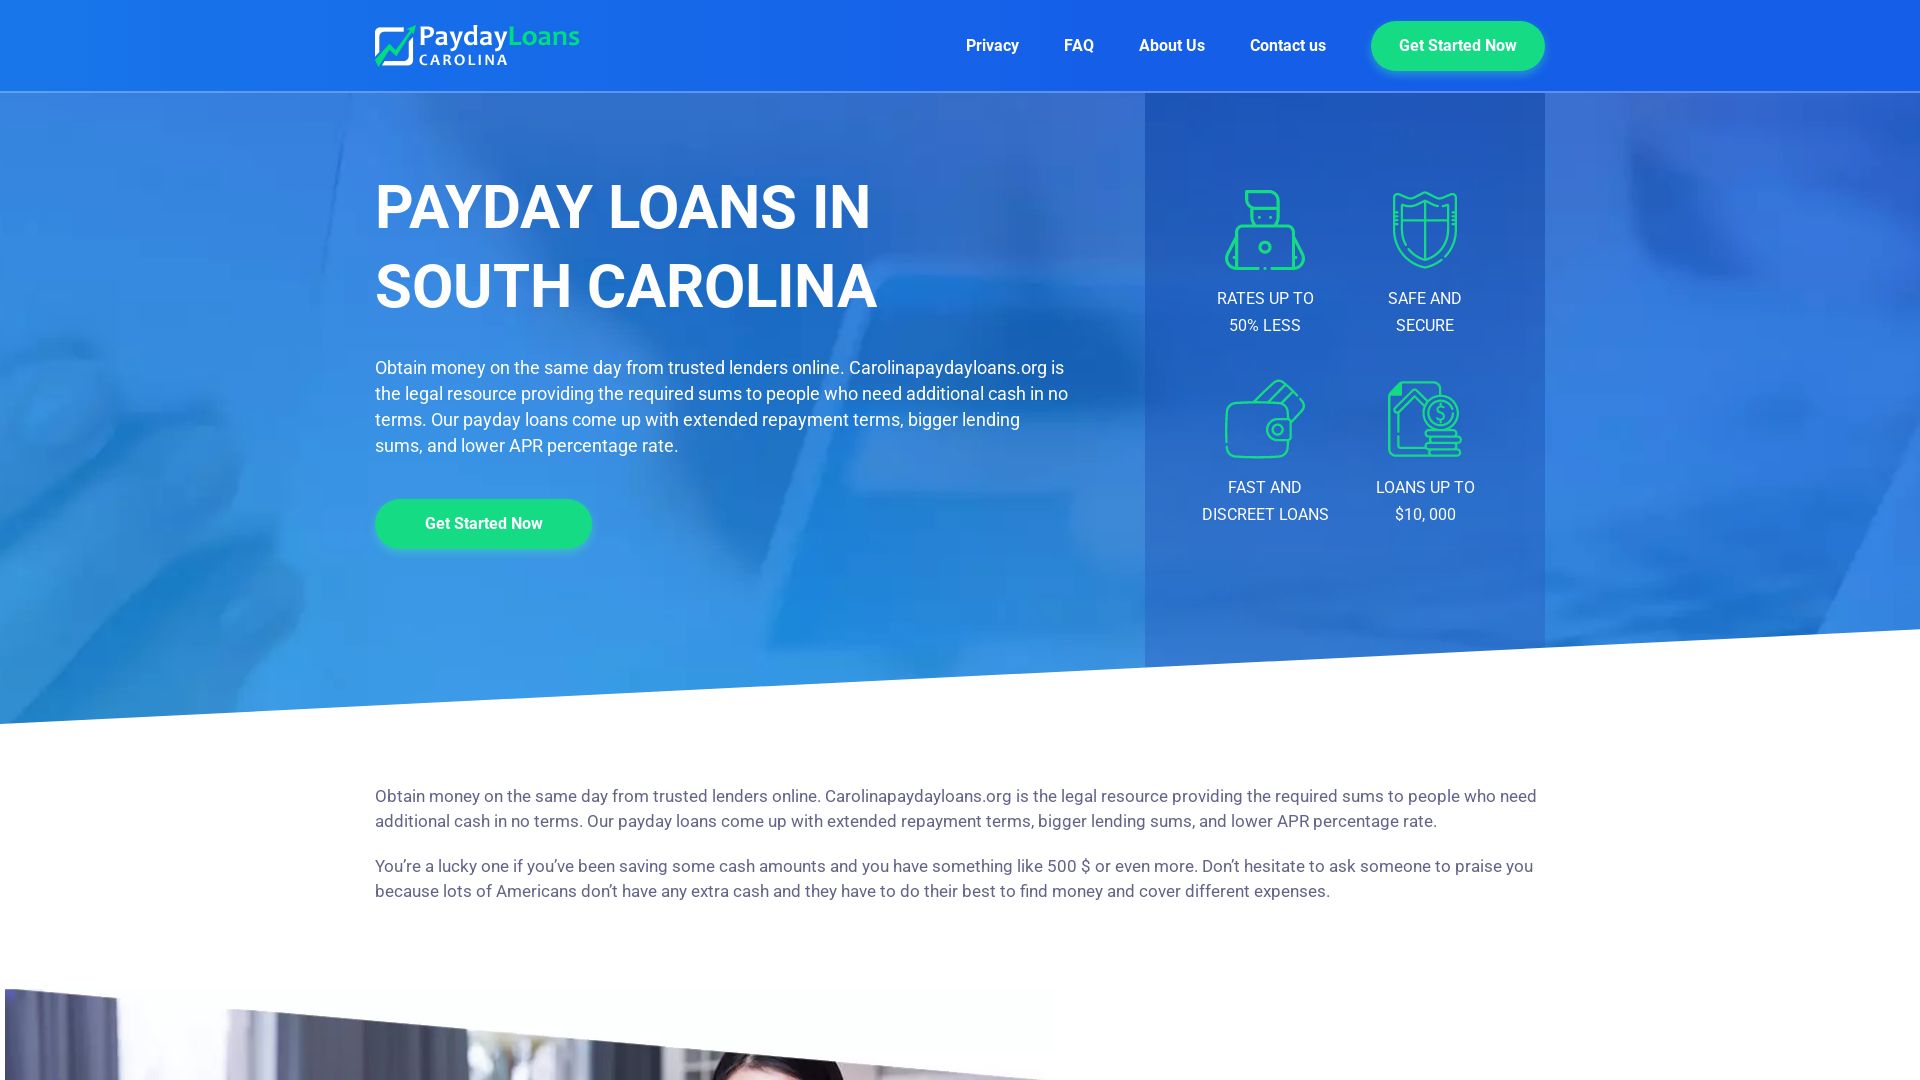 Website status paydayloansnc.org is   ONLINE